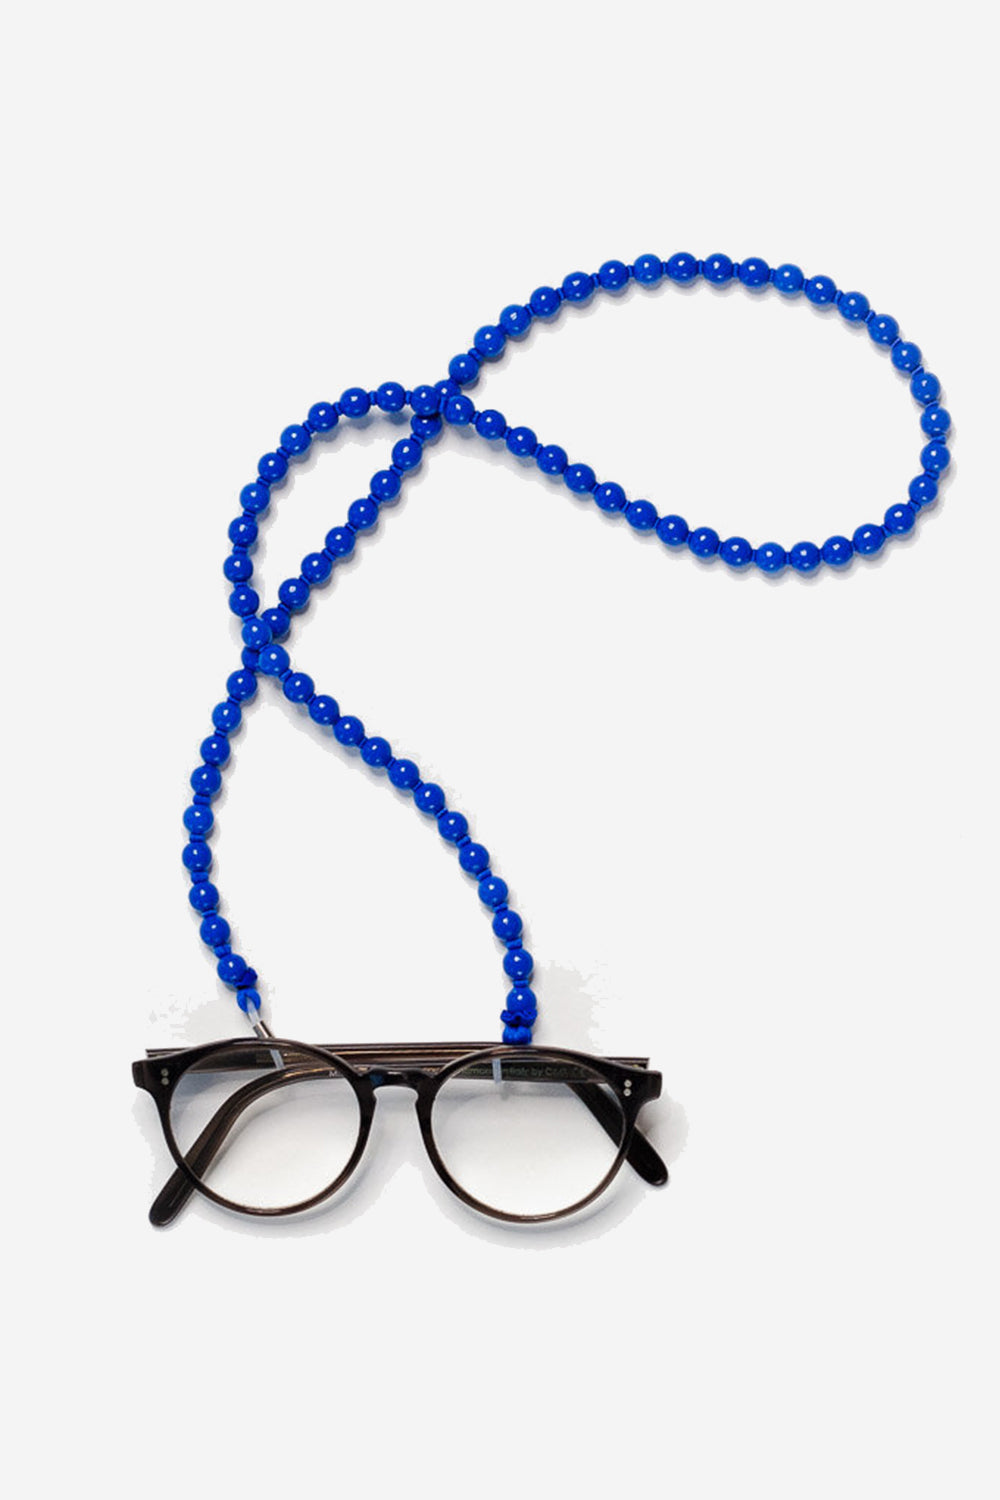 Brillenkette glasses chain, blue/blue